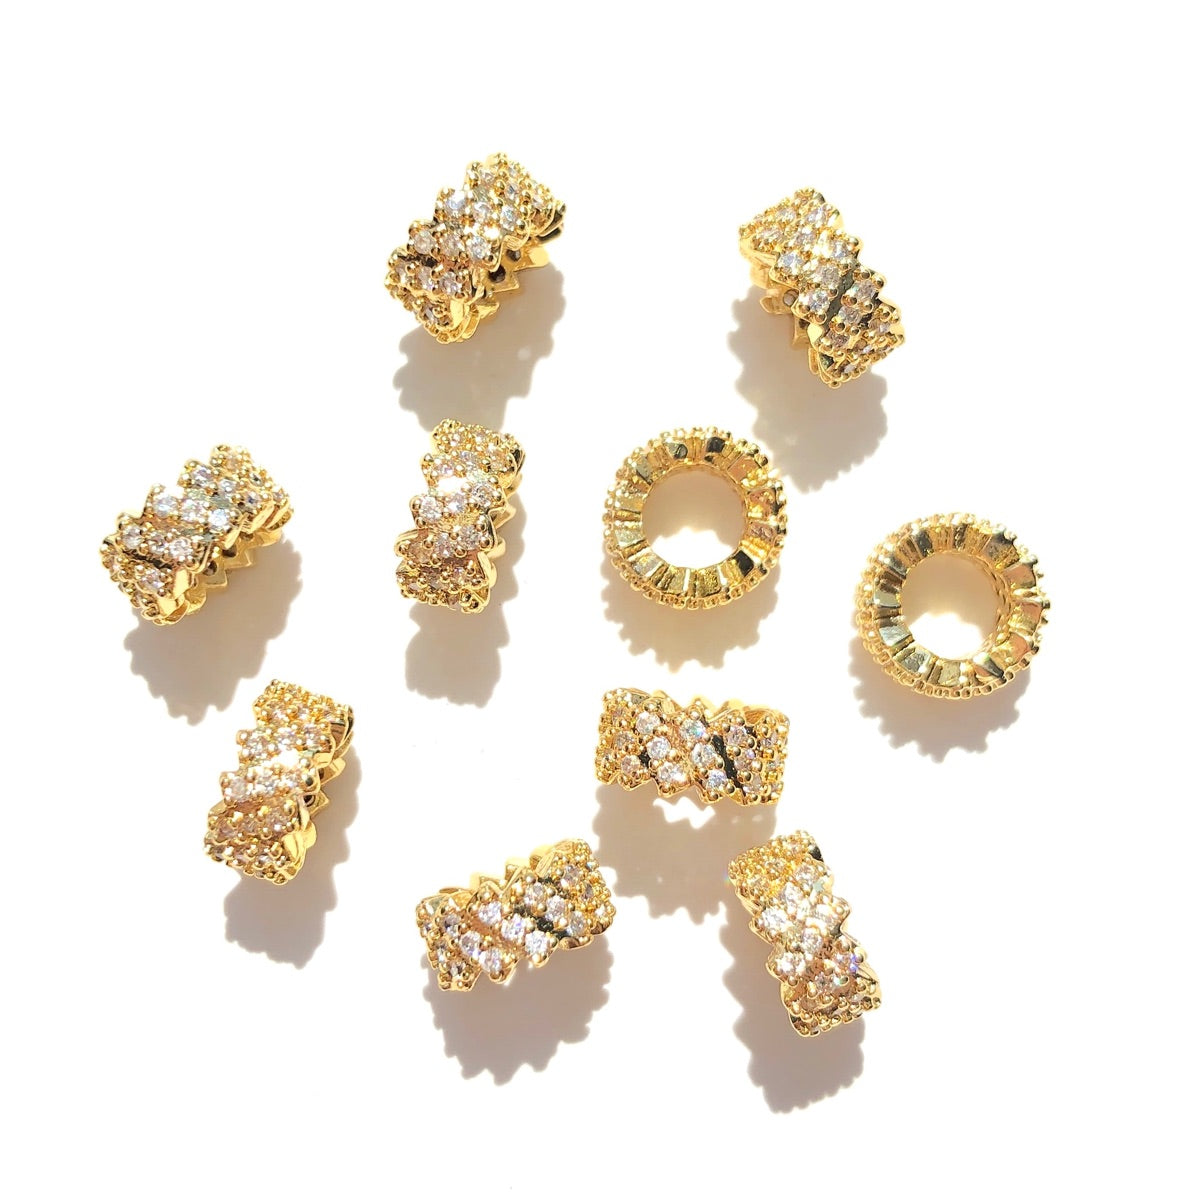 10-20-50pcs/lot 7.7mm CZ Paved Big Hole Rondelle Wheel Spacers Gold CZ Paved Spacers Big Hole Beads New Spacers Arrivals Rondelle Beads Wholesale Charms Beads Beyond